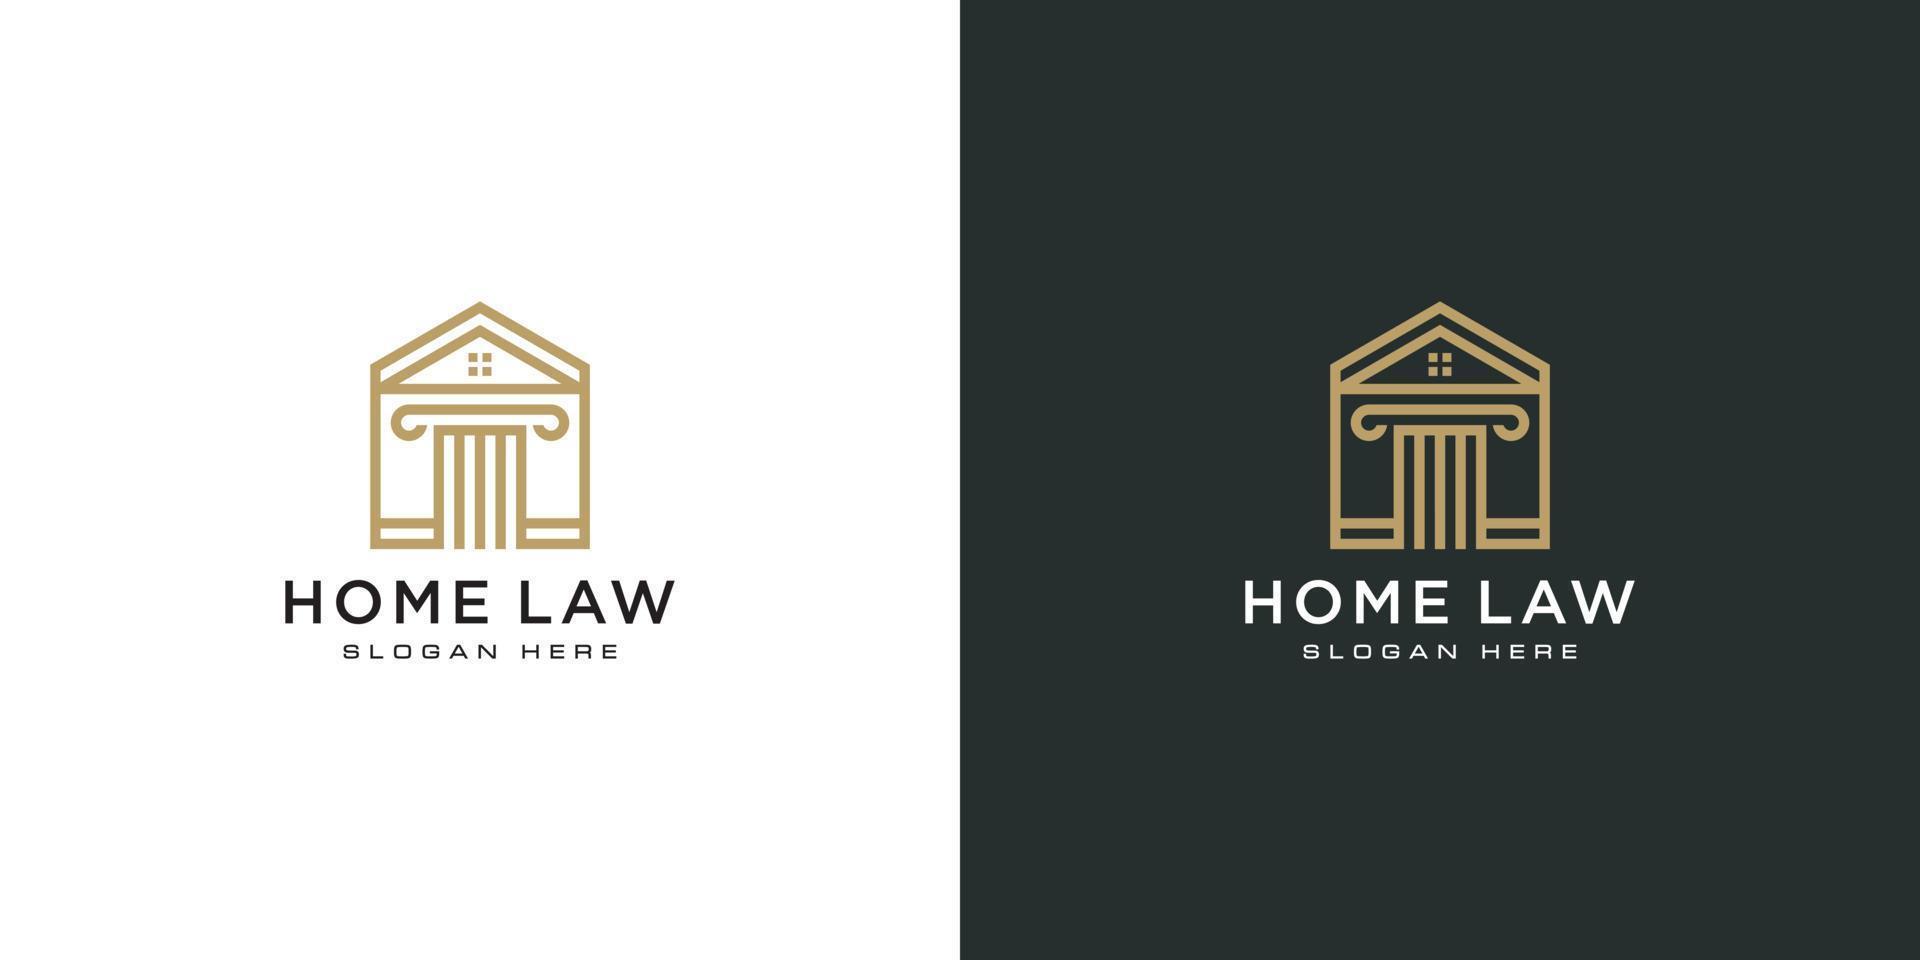 home law firm logo vector design